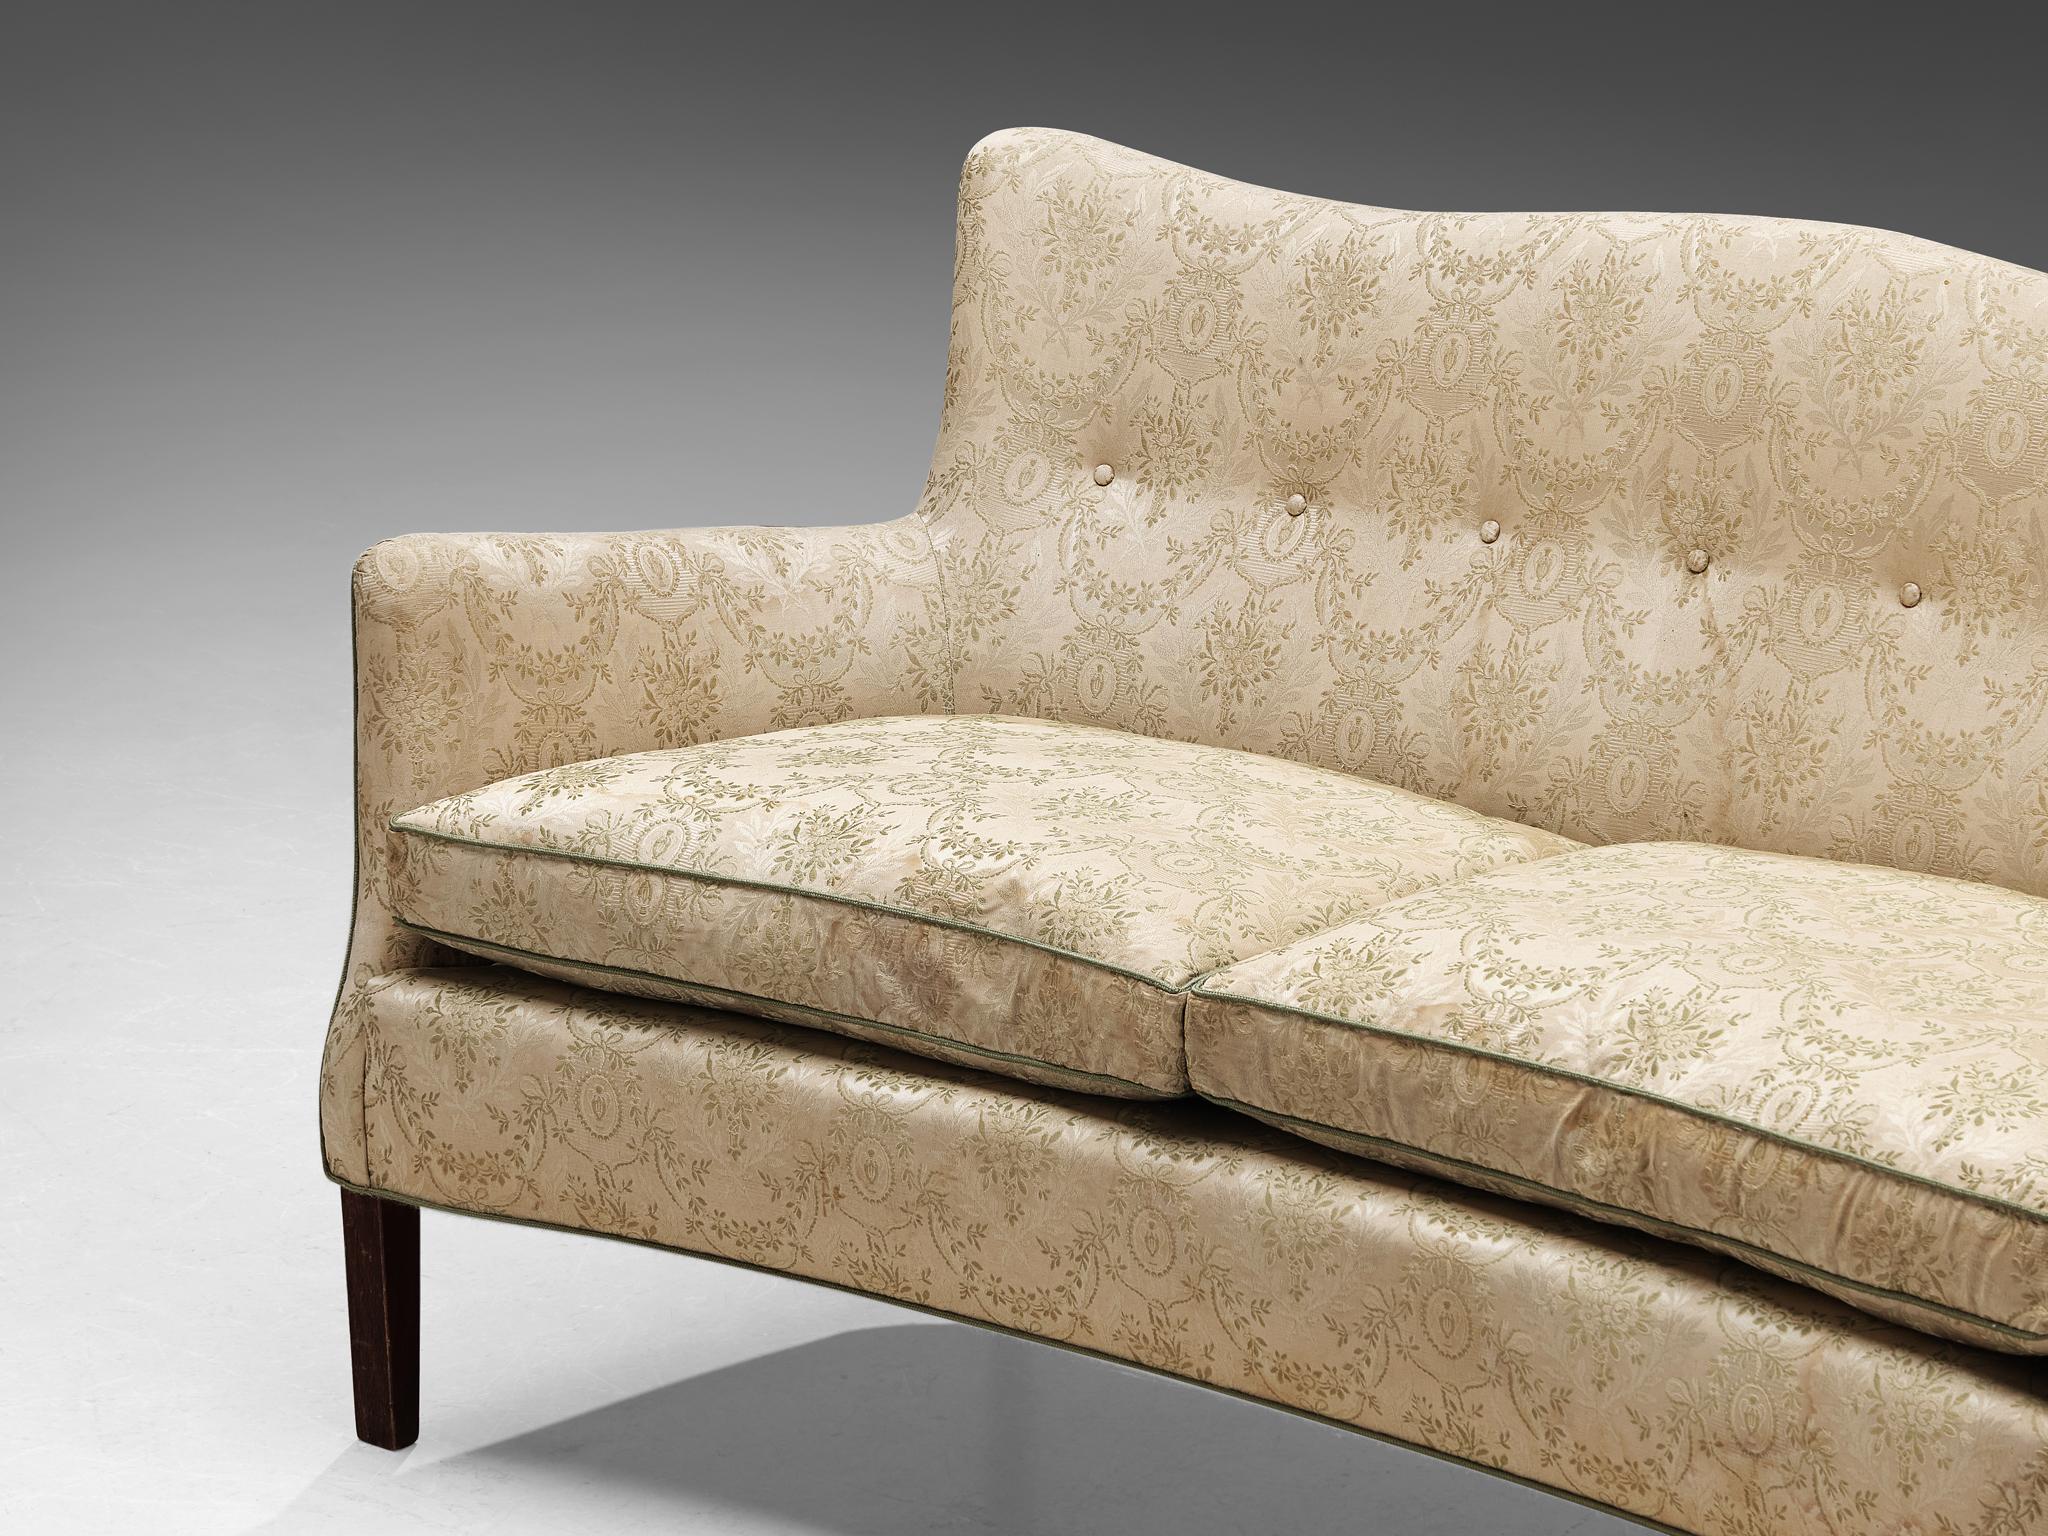 Danish Sofa in Off-White Decorative Upholstery